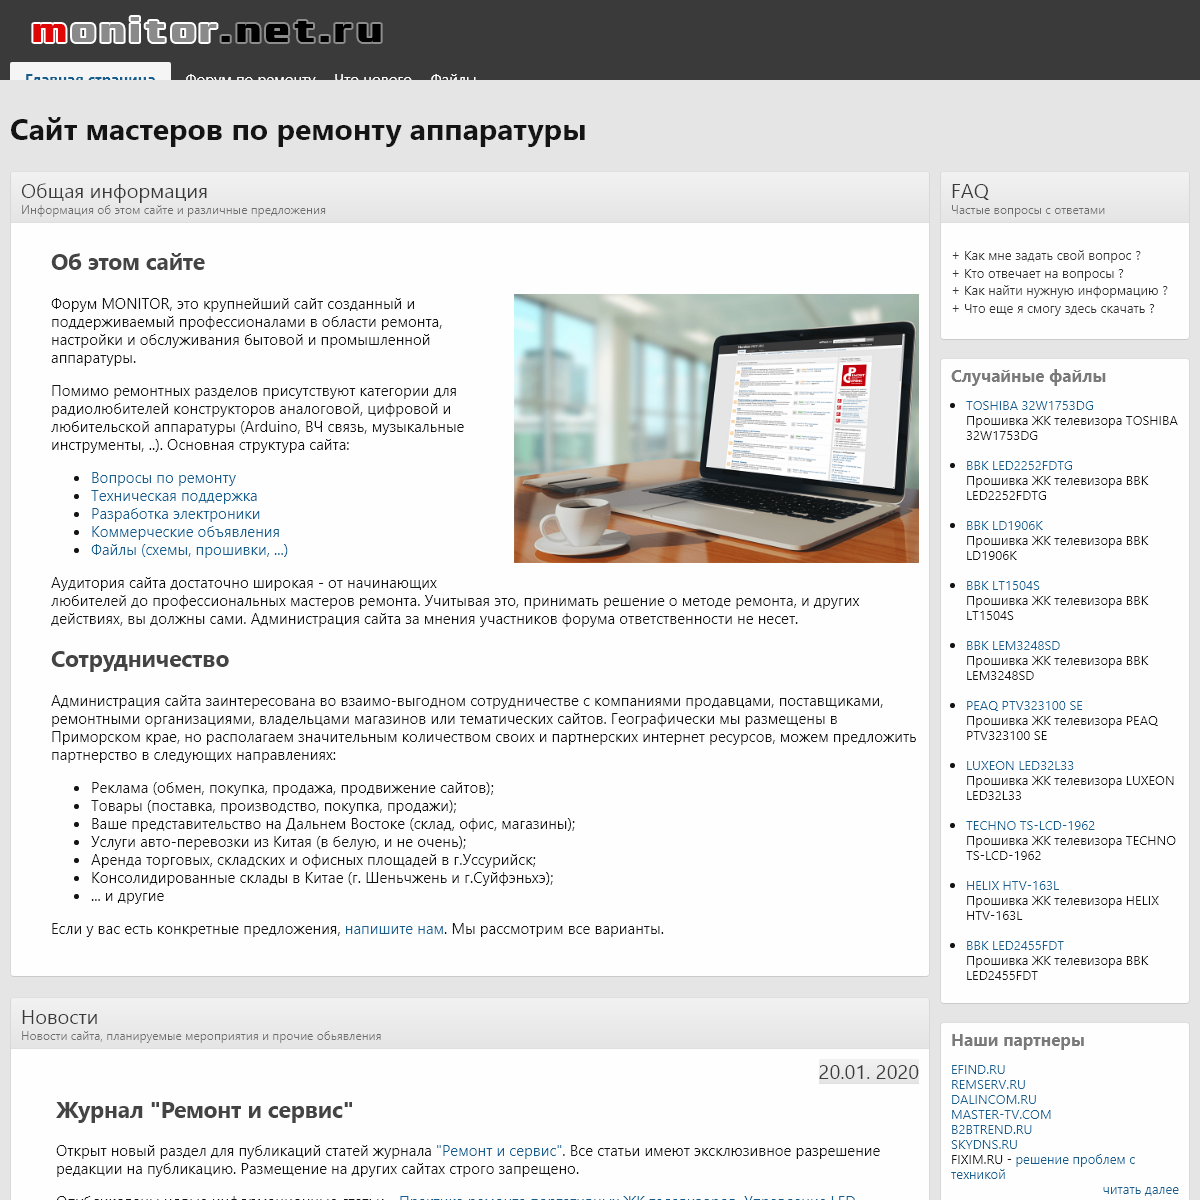 A complete backup of monitor.net.ru